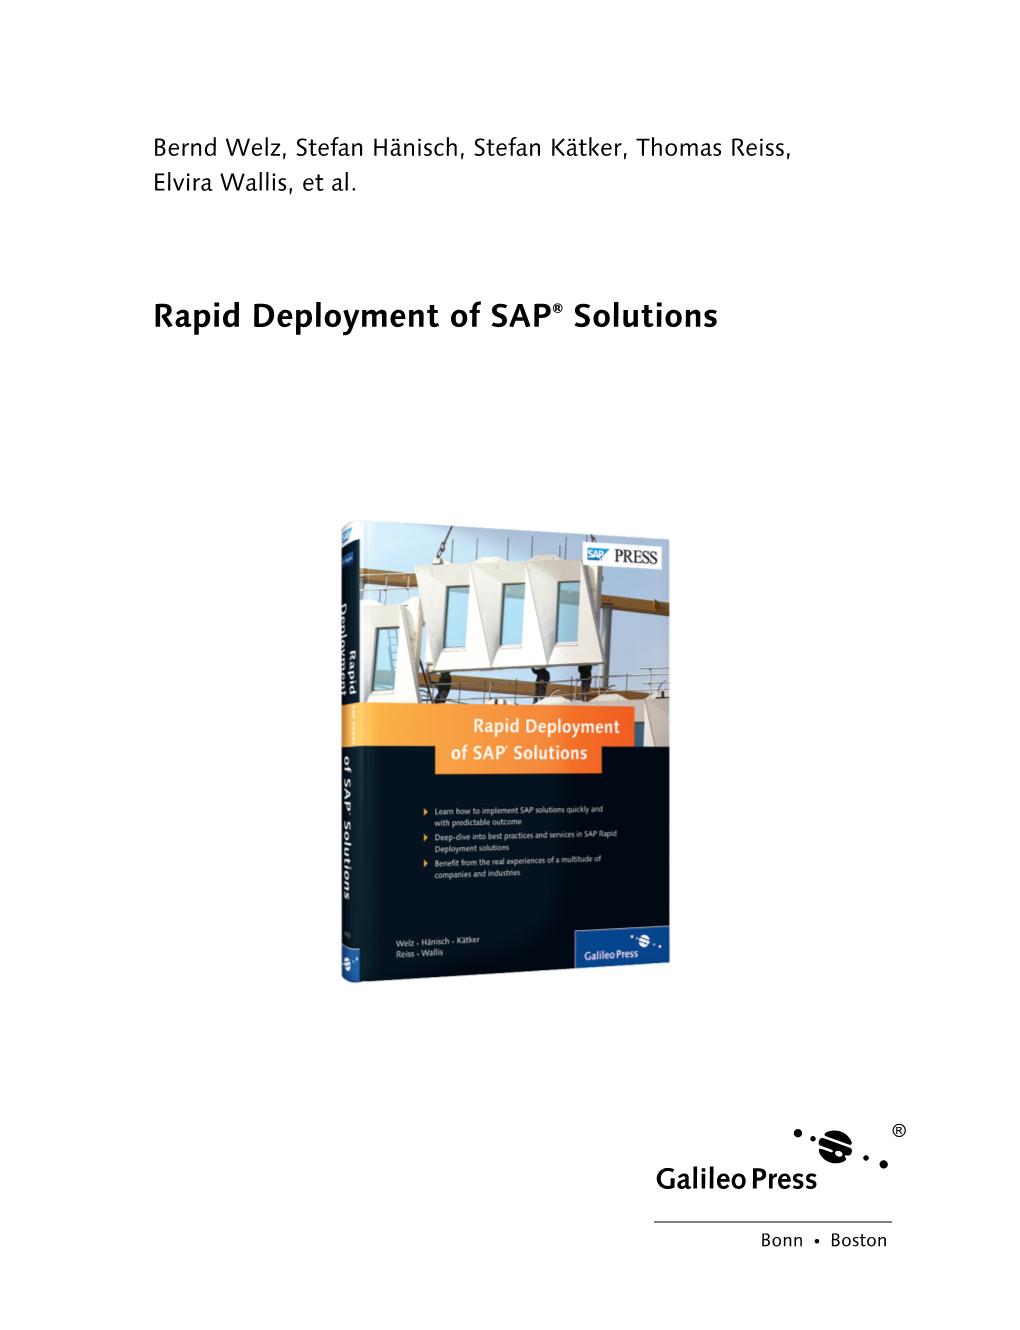 Rapid Deployment of SAP Solutions?